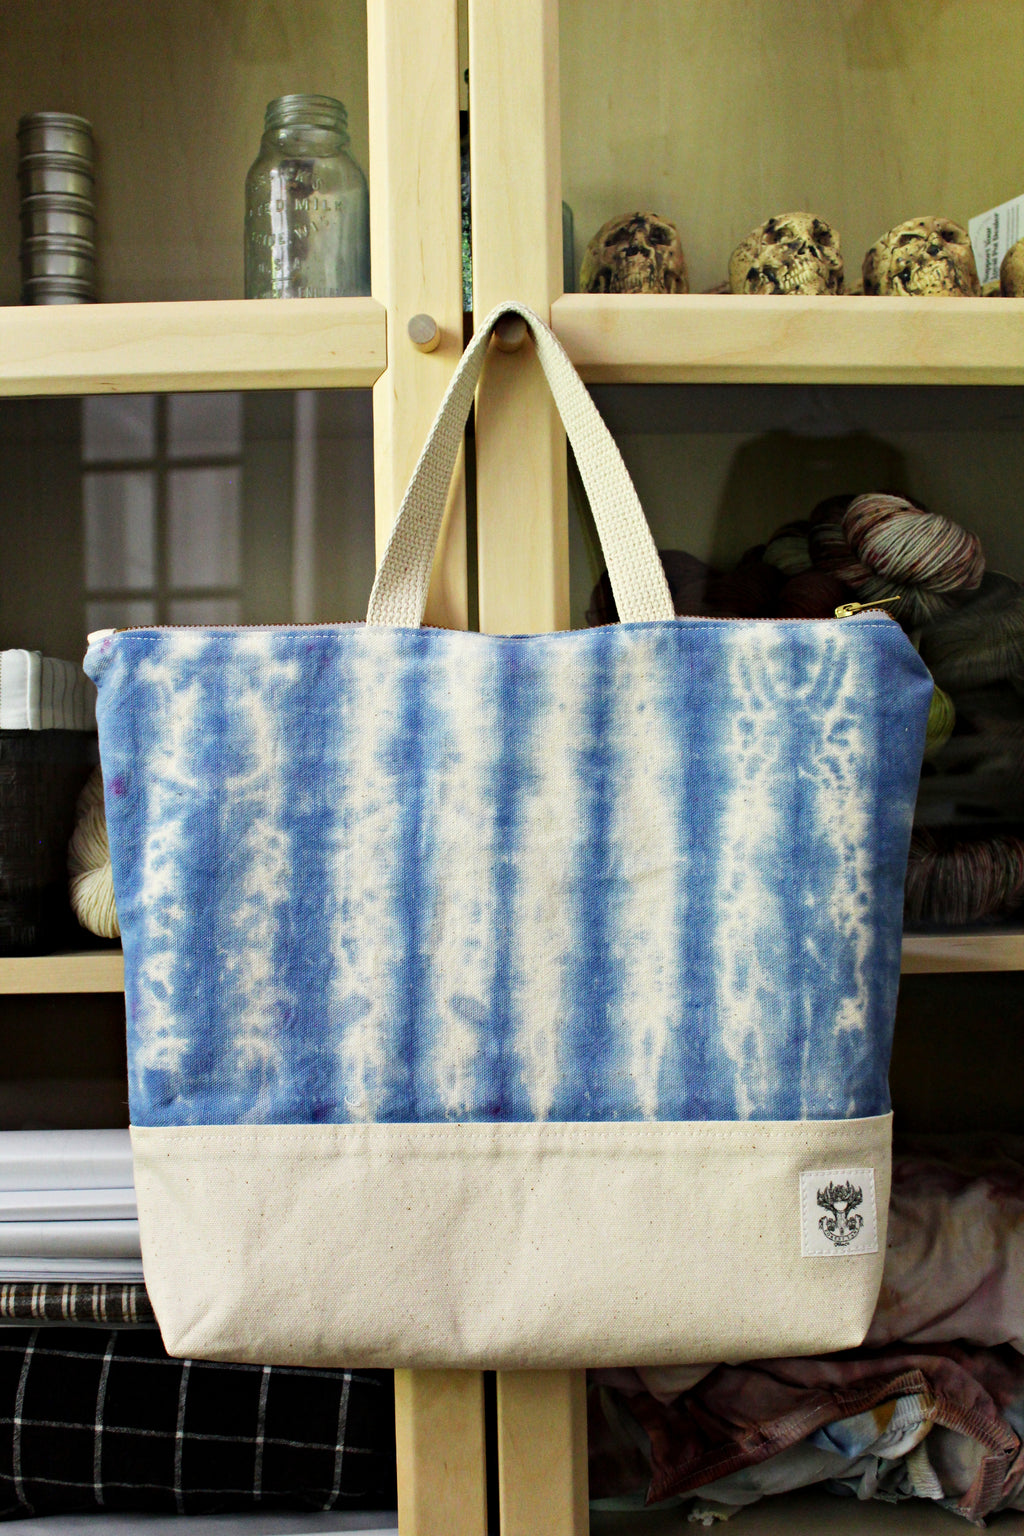 Sky Blue 1 - Sweater-Sized Project Bag - Shibori Tie-Dyed